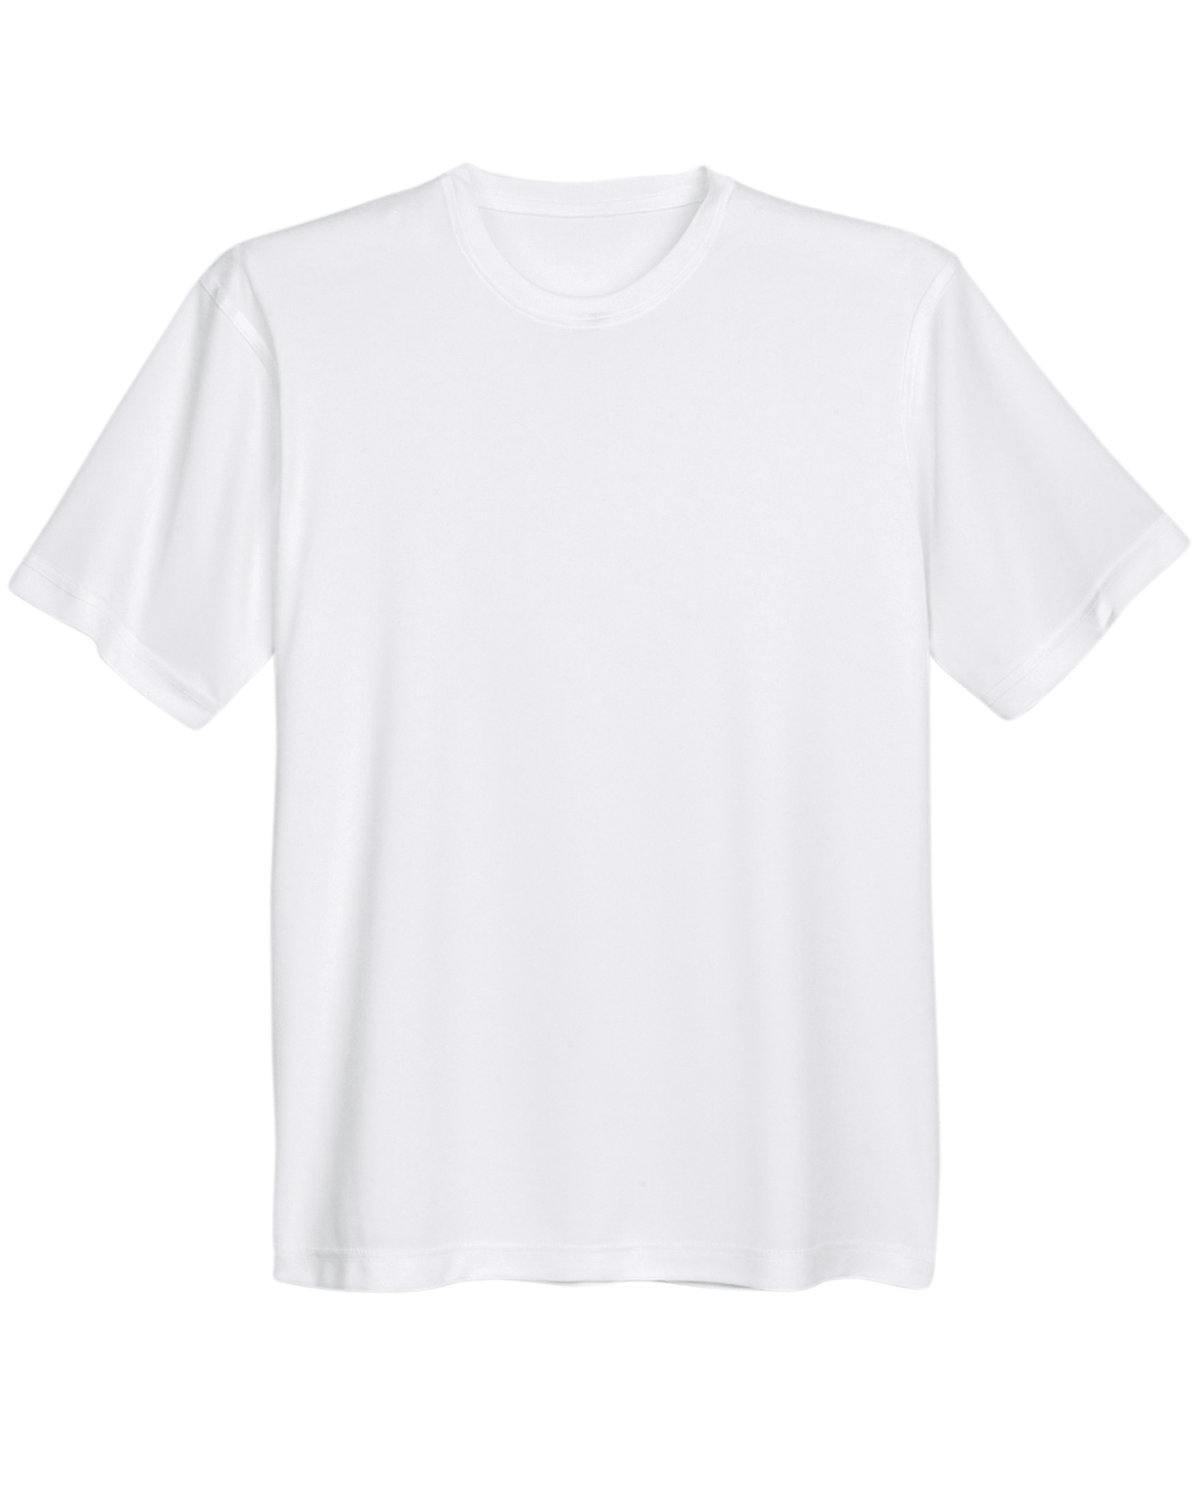 Image for Men's Cool & Dry Basic Performance T-Shirt